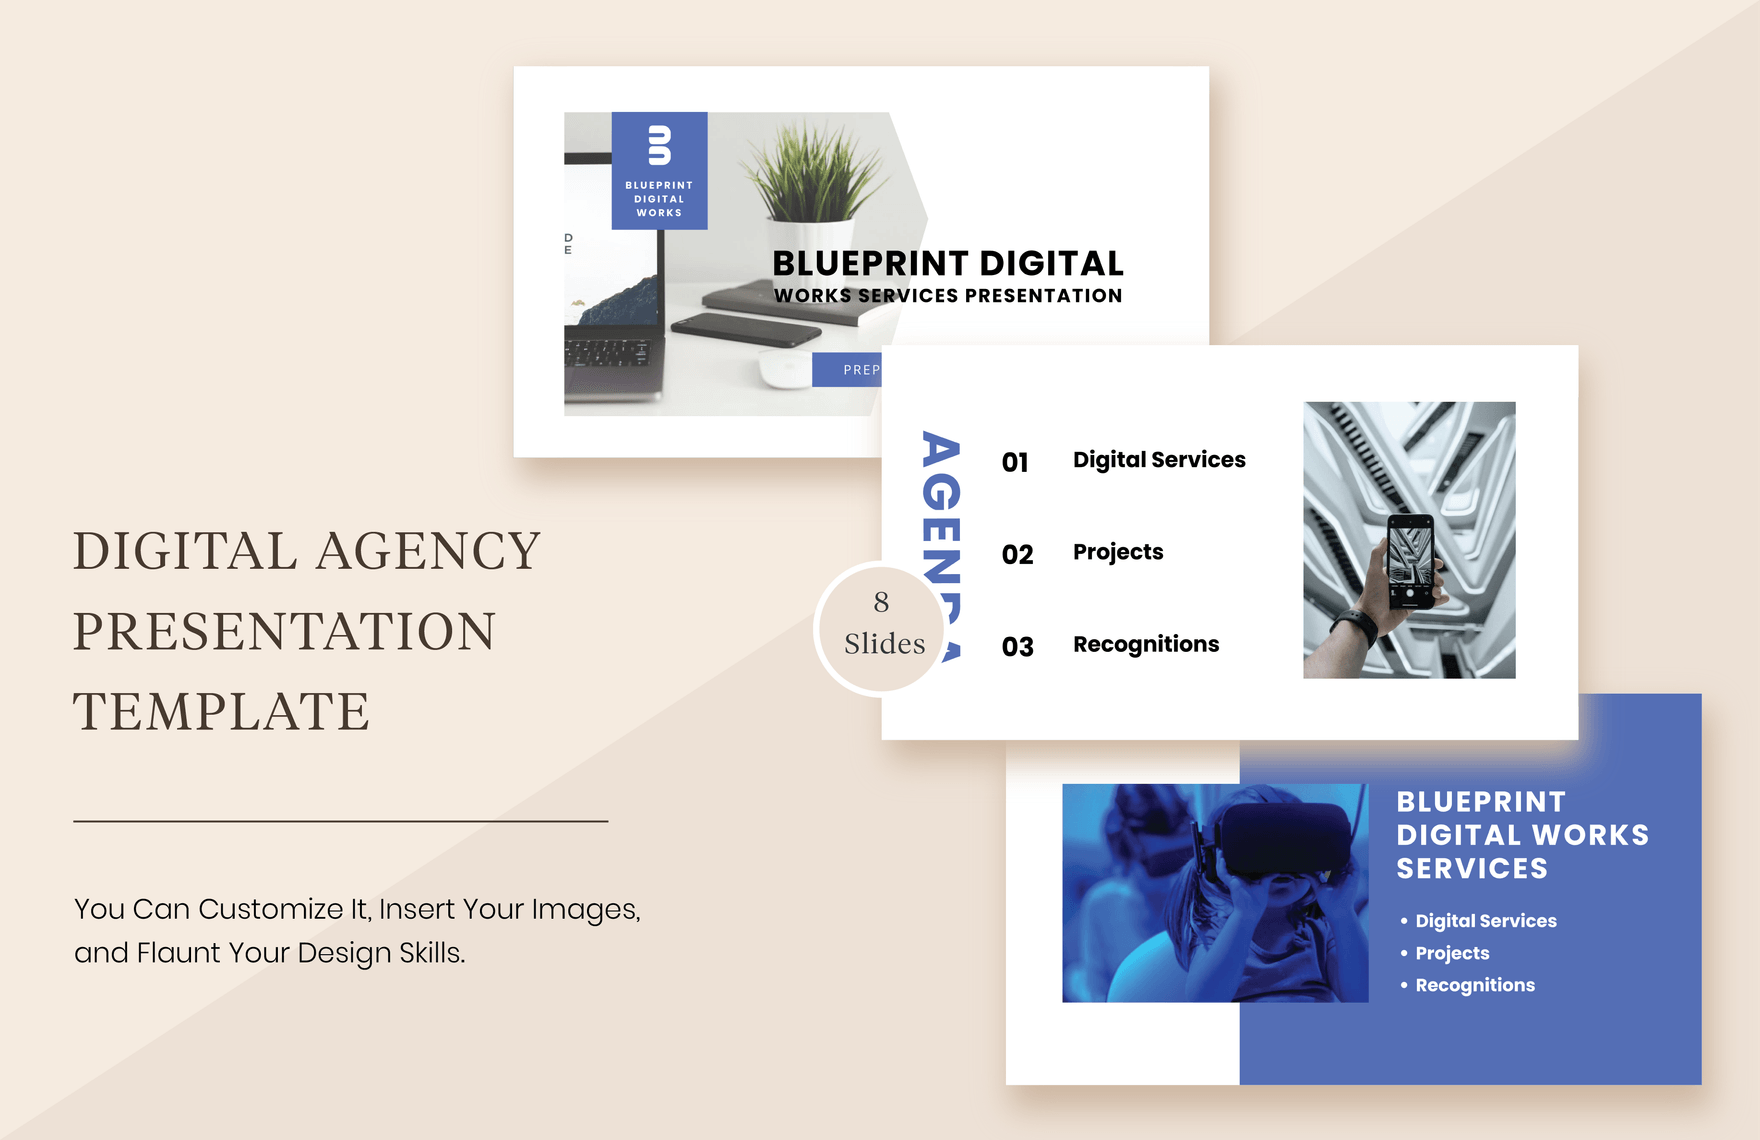 Digital Agency Presentation Template